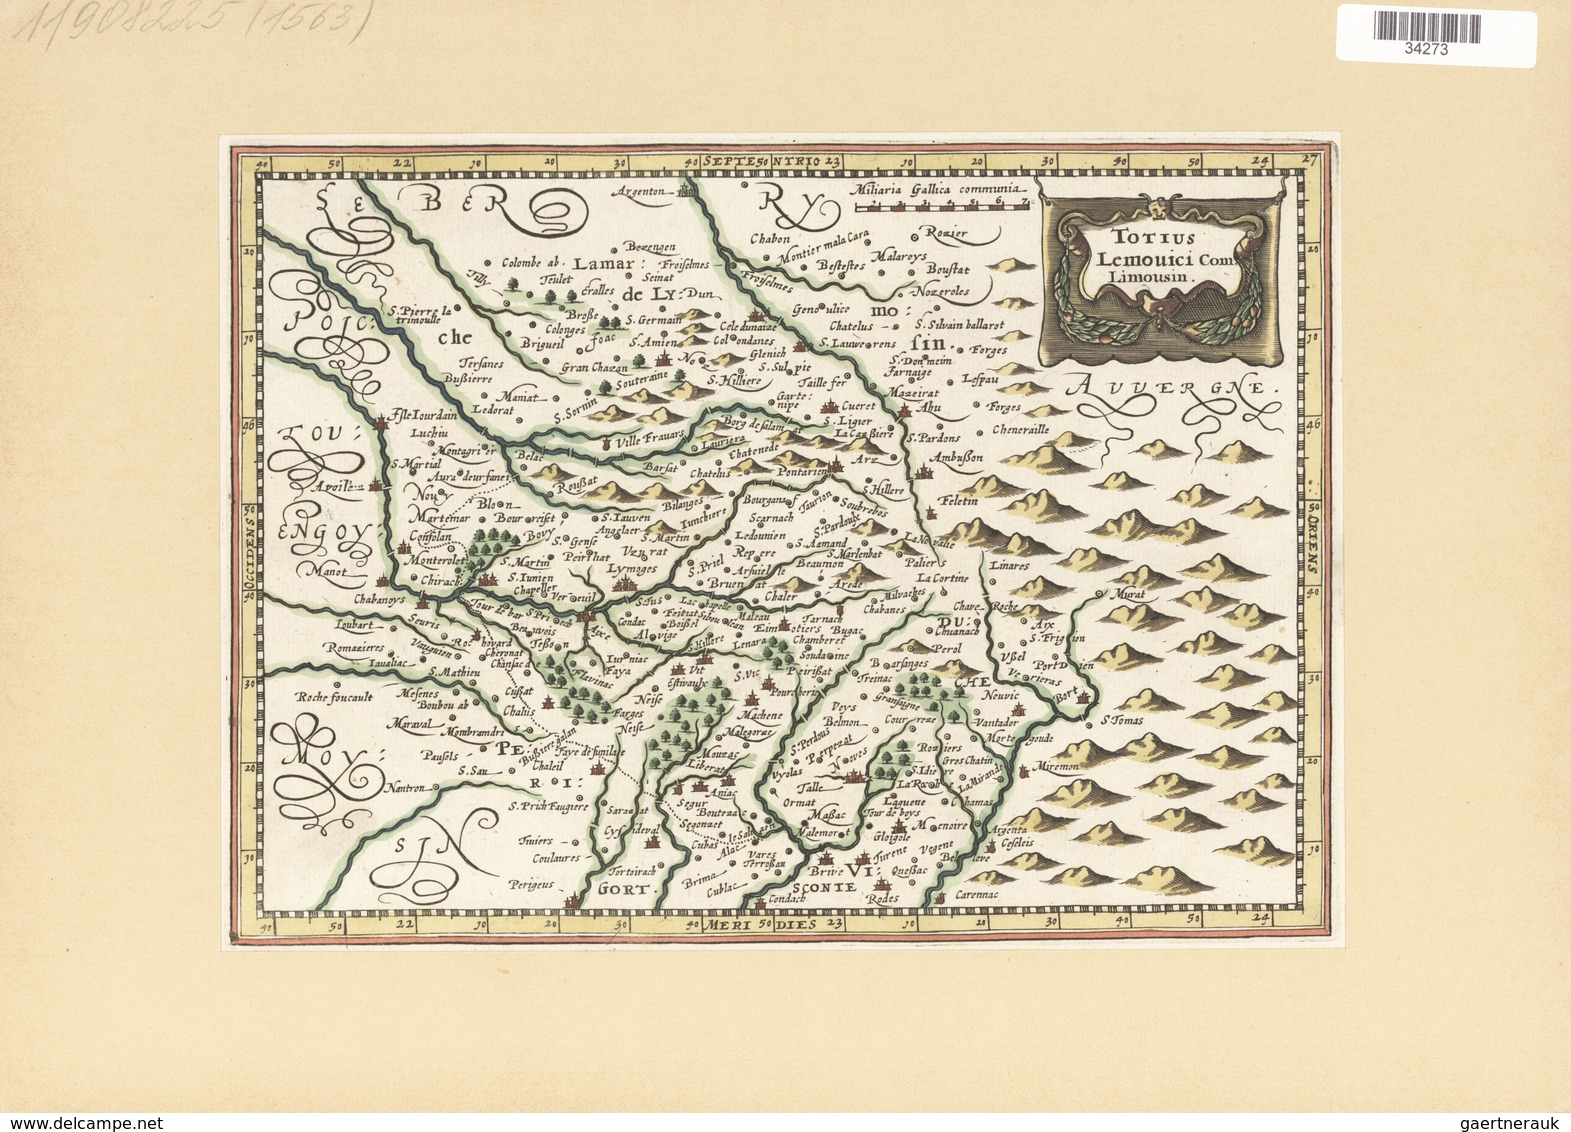 Landkarten Und Stiche: 1734. Totius Lemouici Com Limousin From The Mercator Atlas Minor Ca 1648, Lat - Geographie